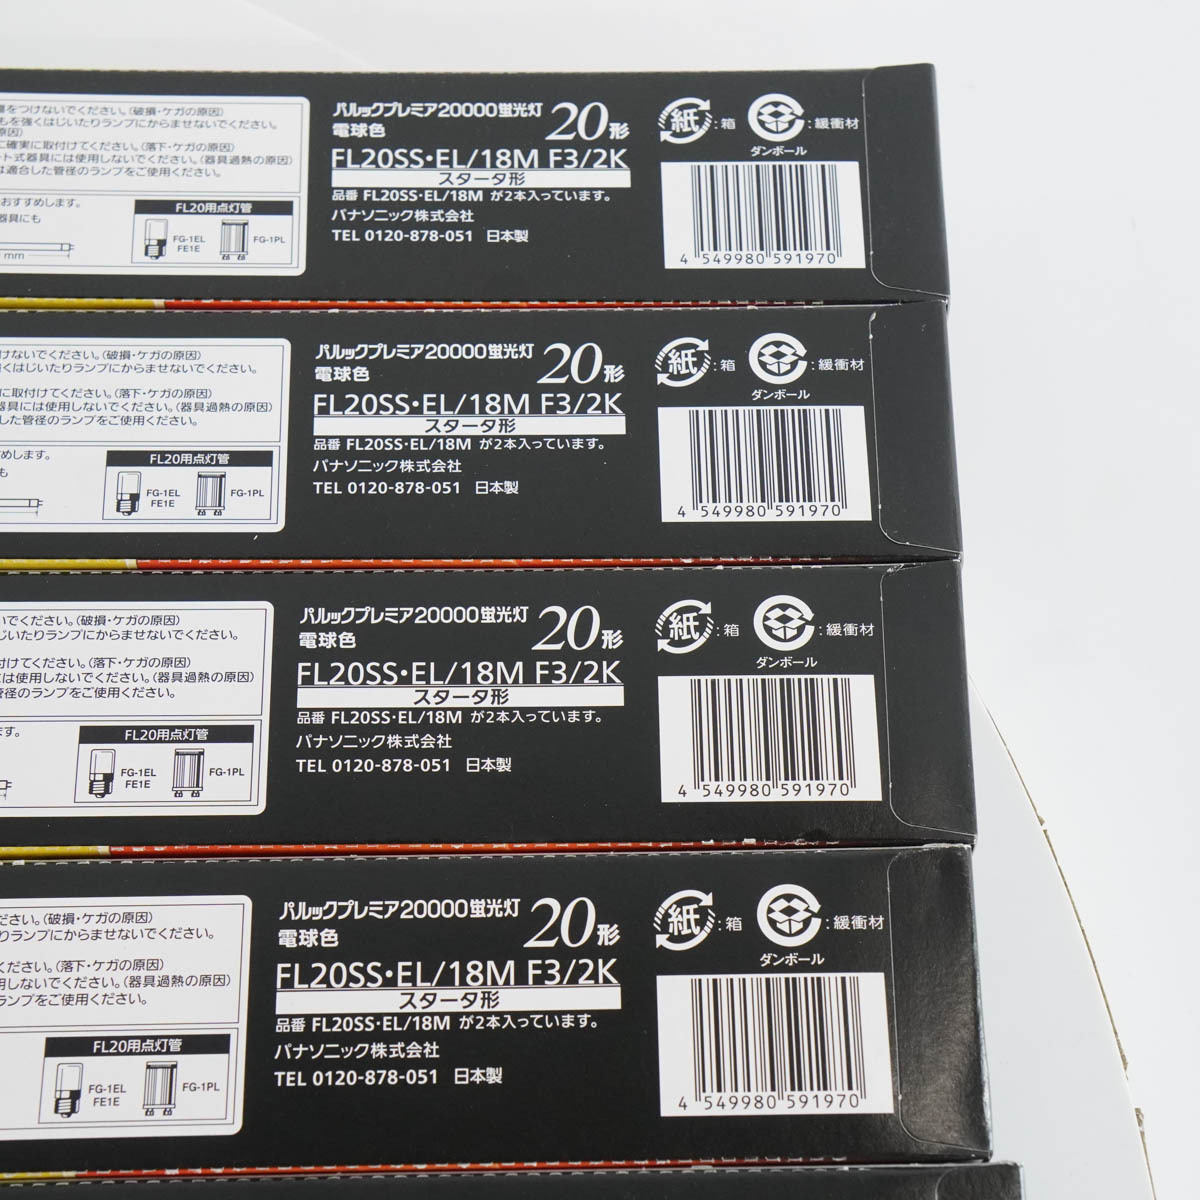 [PG] 8 day guarantee 2 pcs insertion .9 box set unused goods FL20SS EL/18M F3/2K Panasonic Panasonic pa look premium 2000 fluorescent lamp 20 type...[05699-0210]